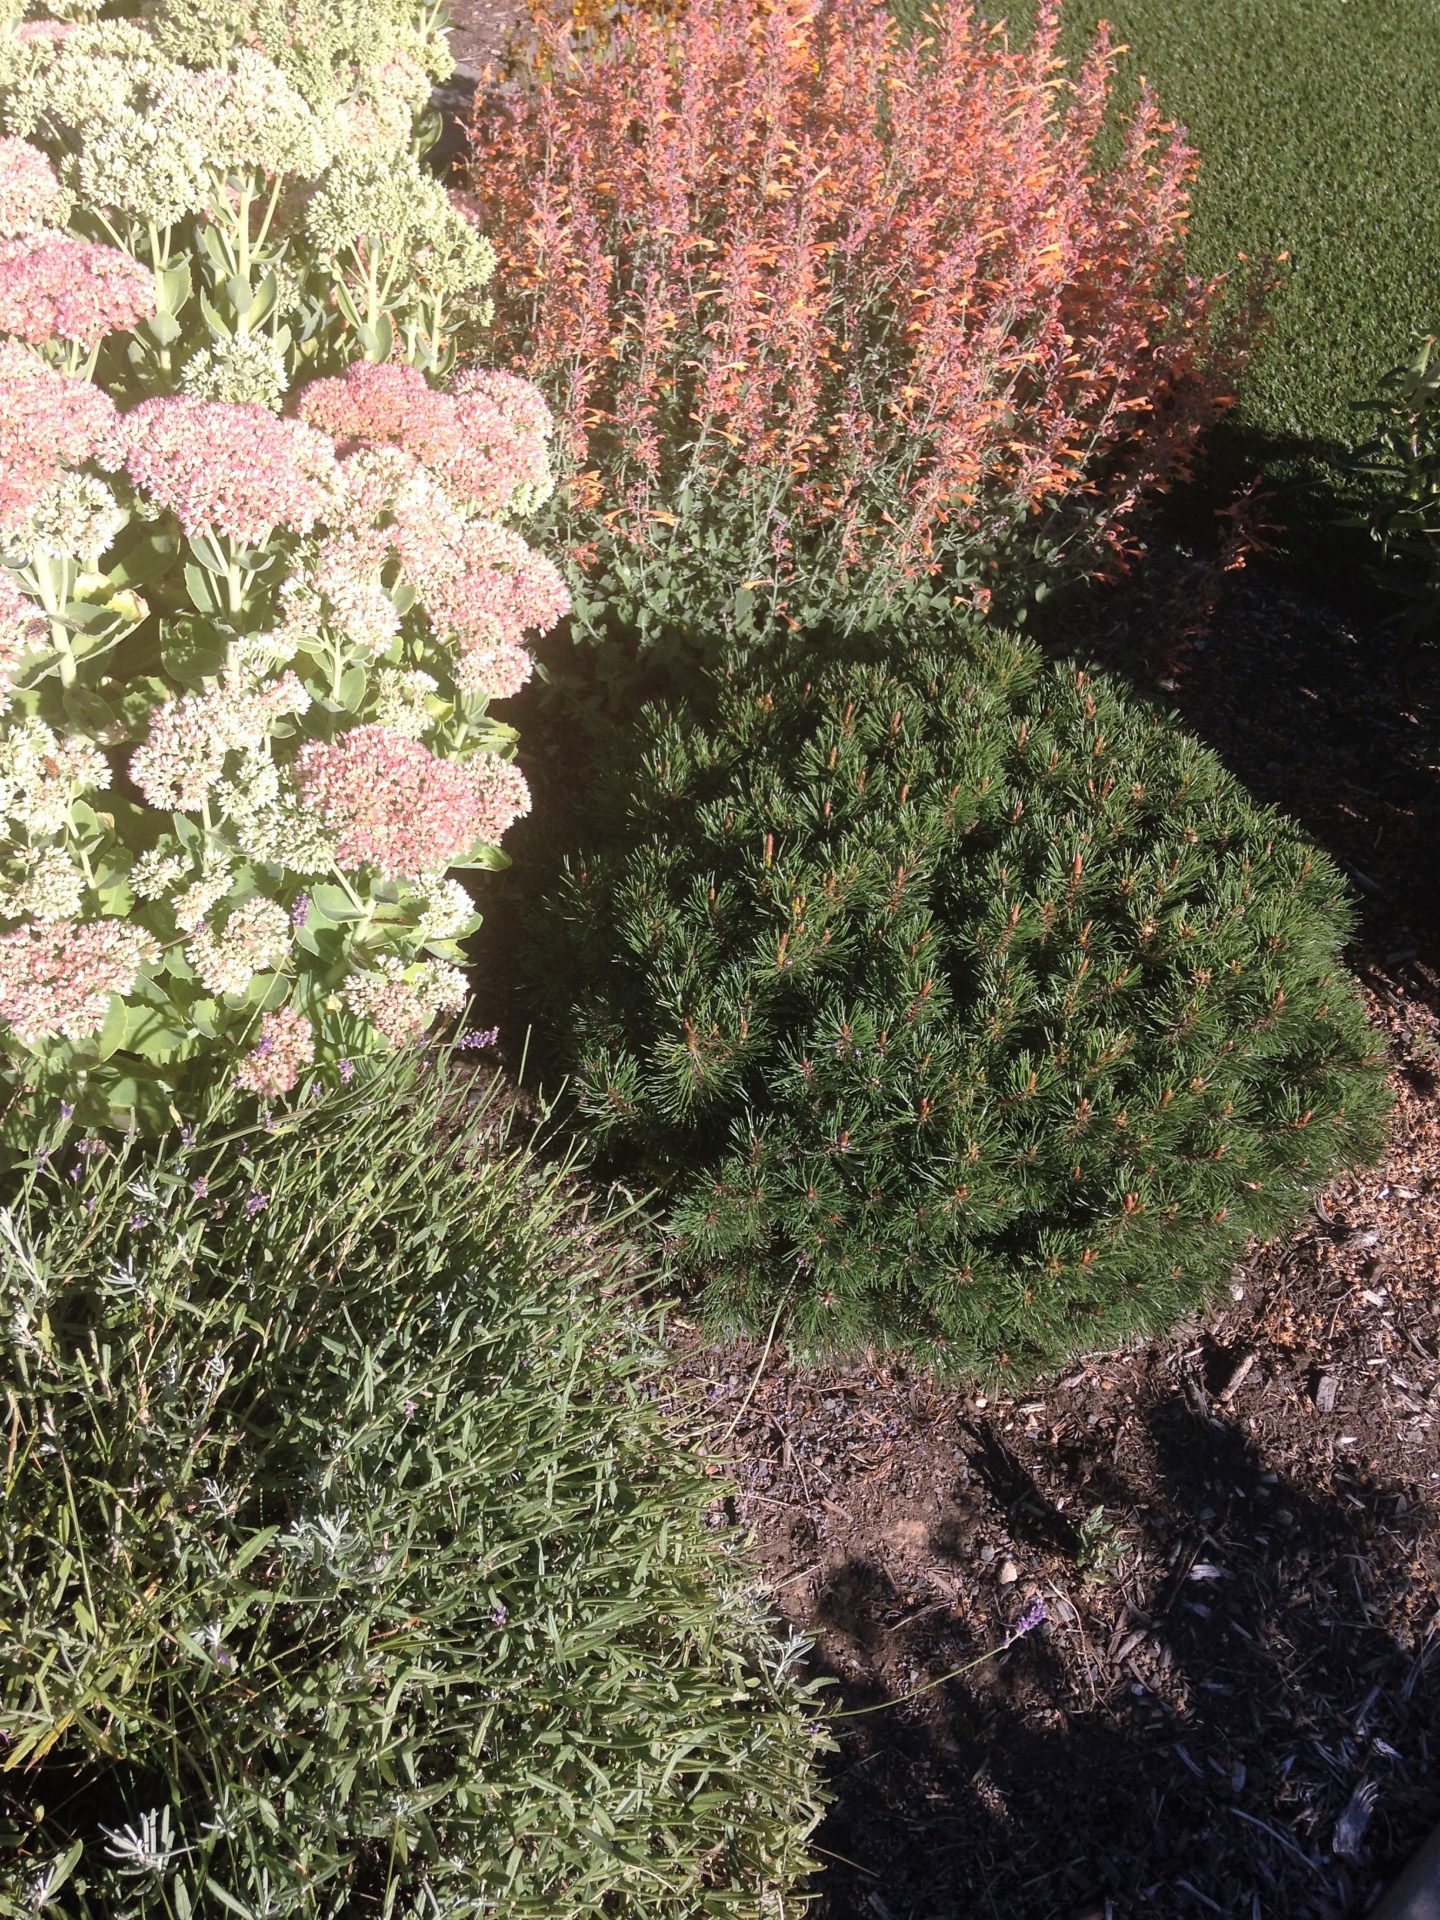 Image of Heather mugo pine companion plant